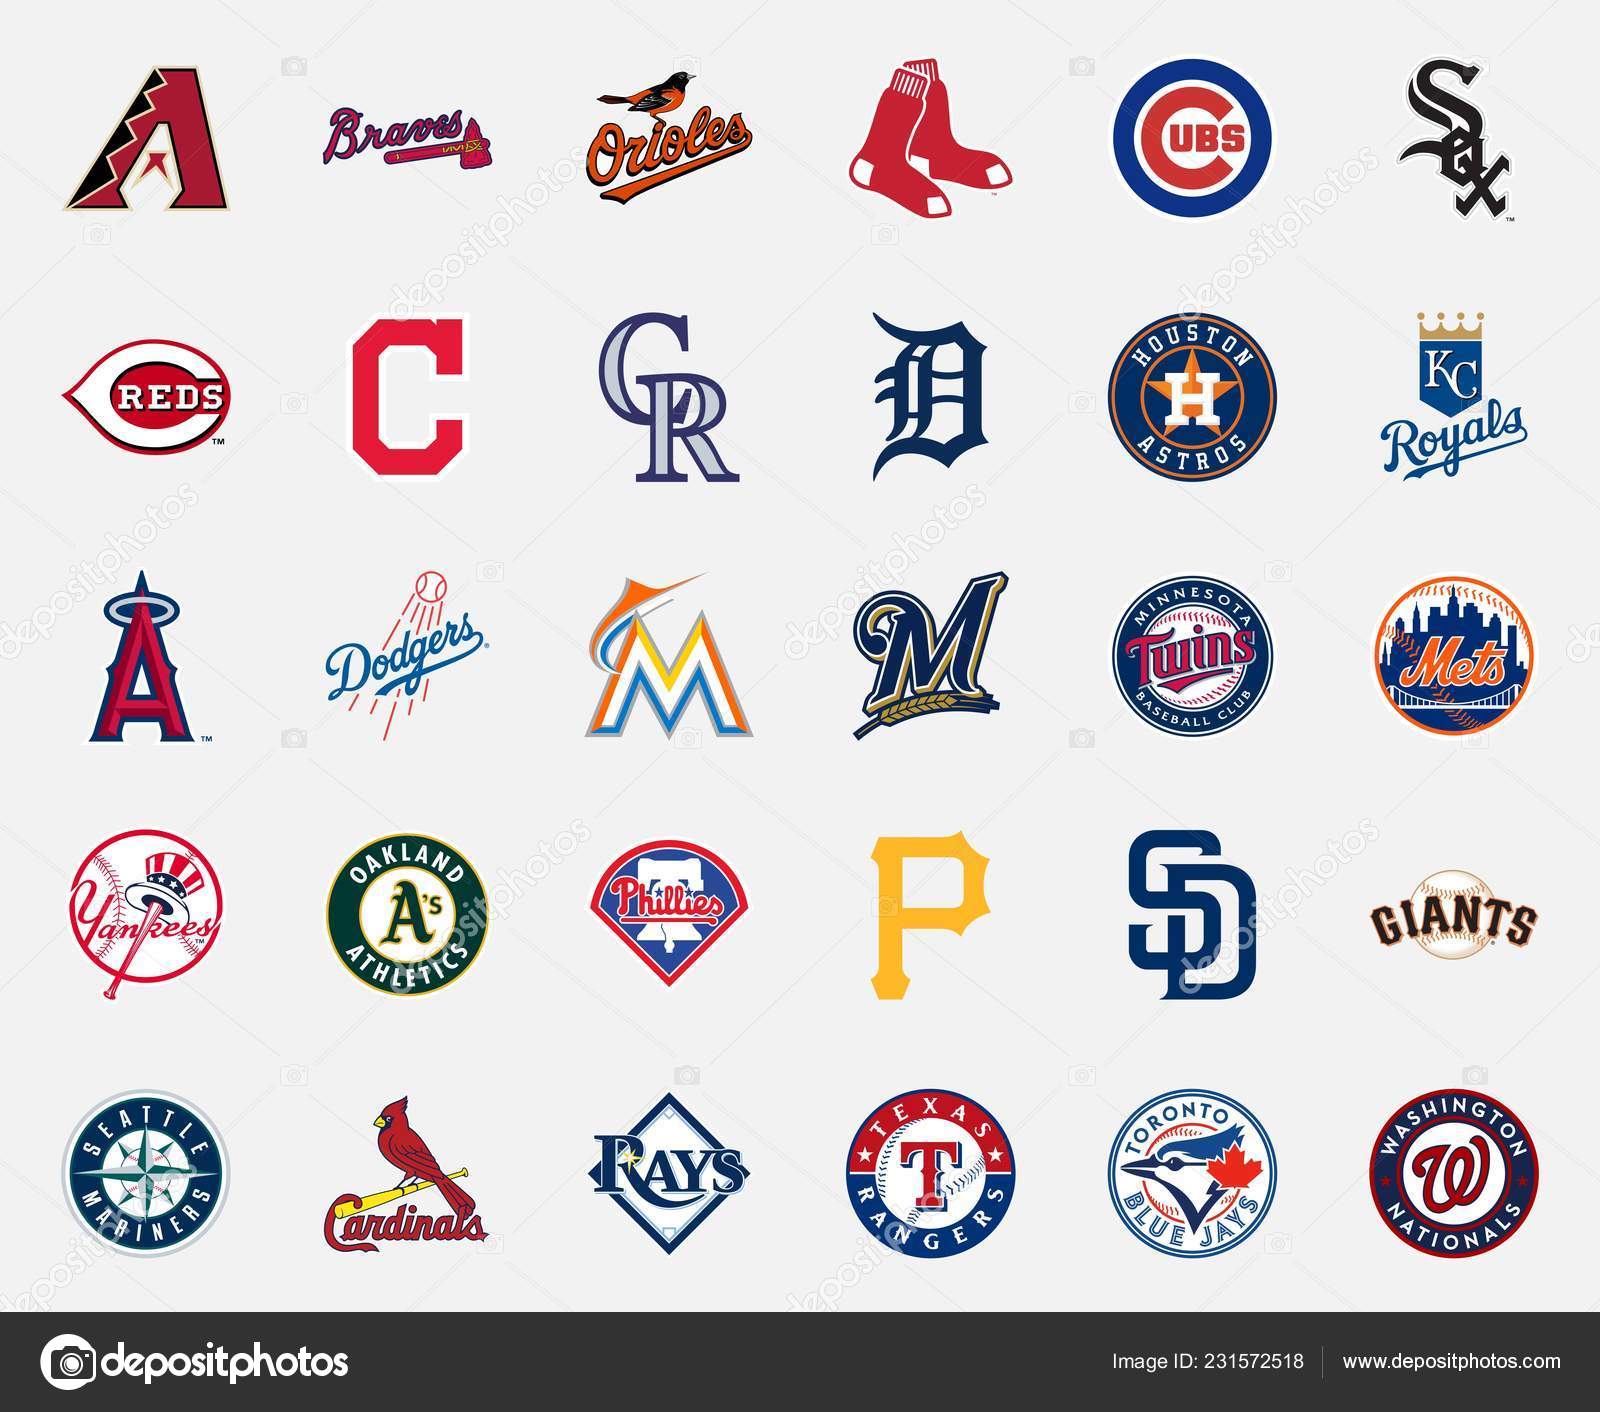 Major league baseball helmet Cut Out Stock Images  Pictures  Alamy